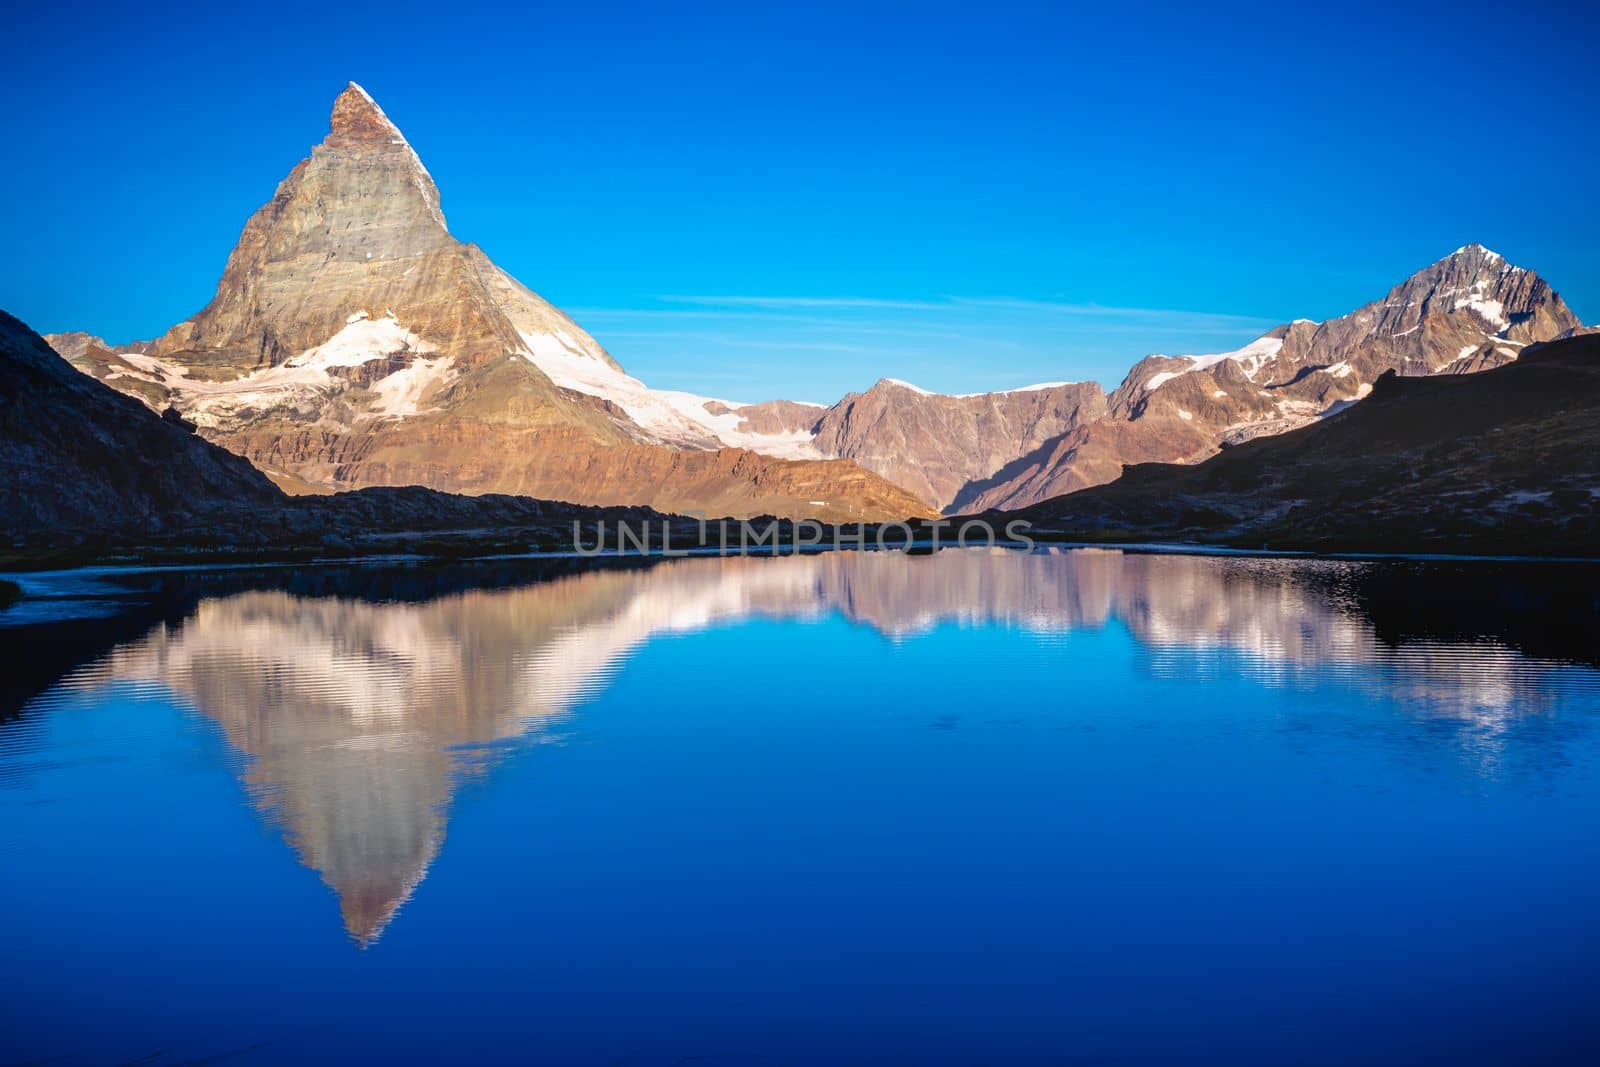 Reflection of the Matterhorn on blue lake at sunrise, Swiss Alps, Zermatt by positivetravelart